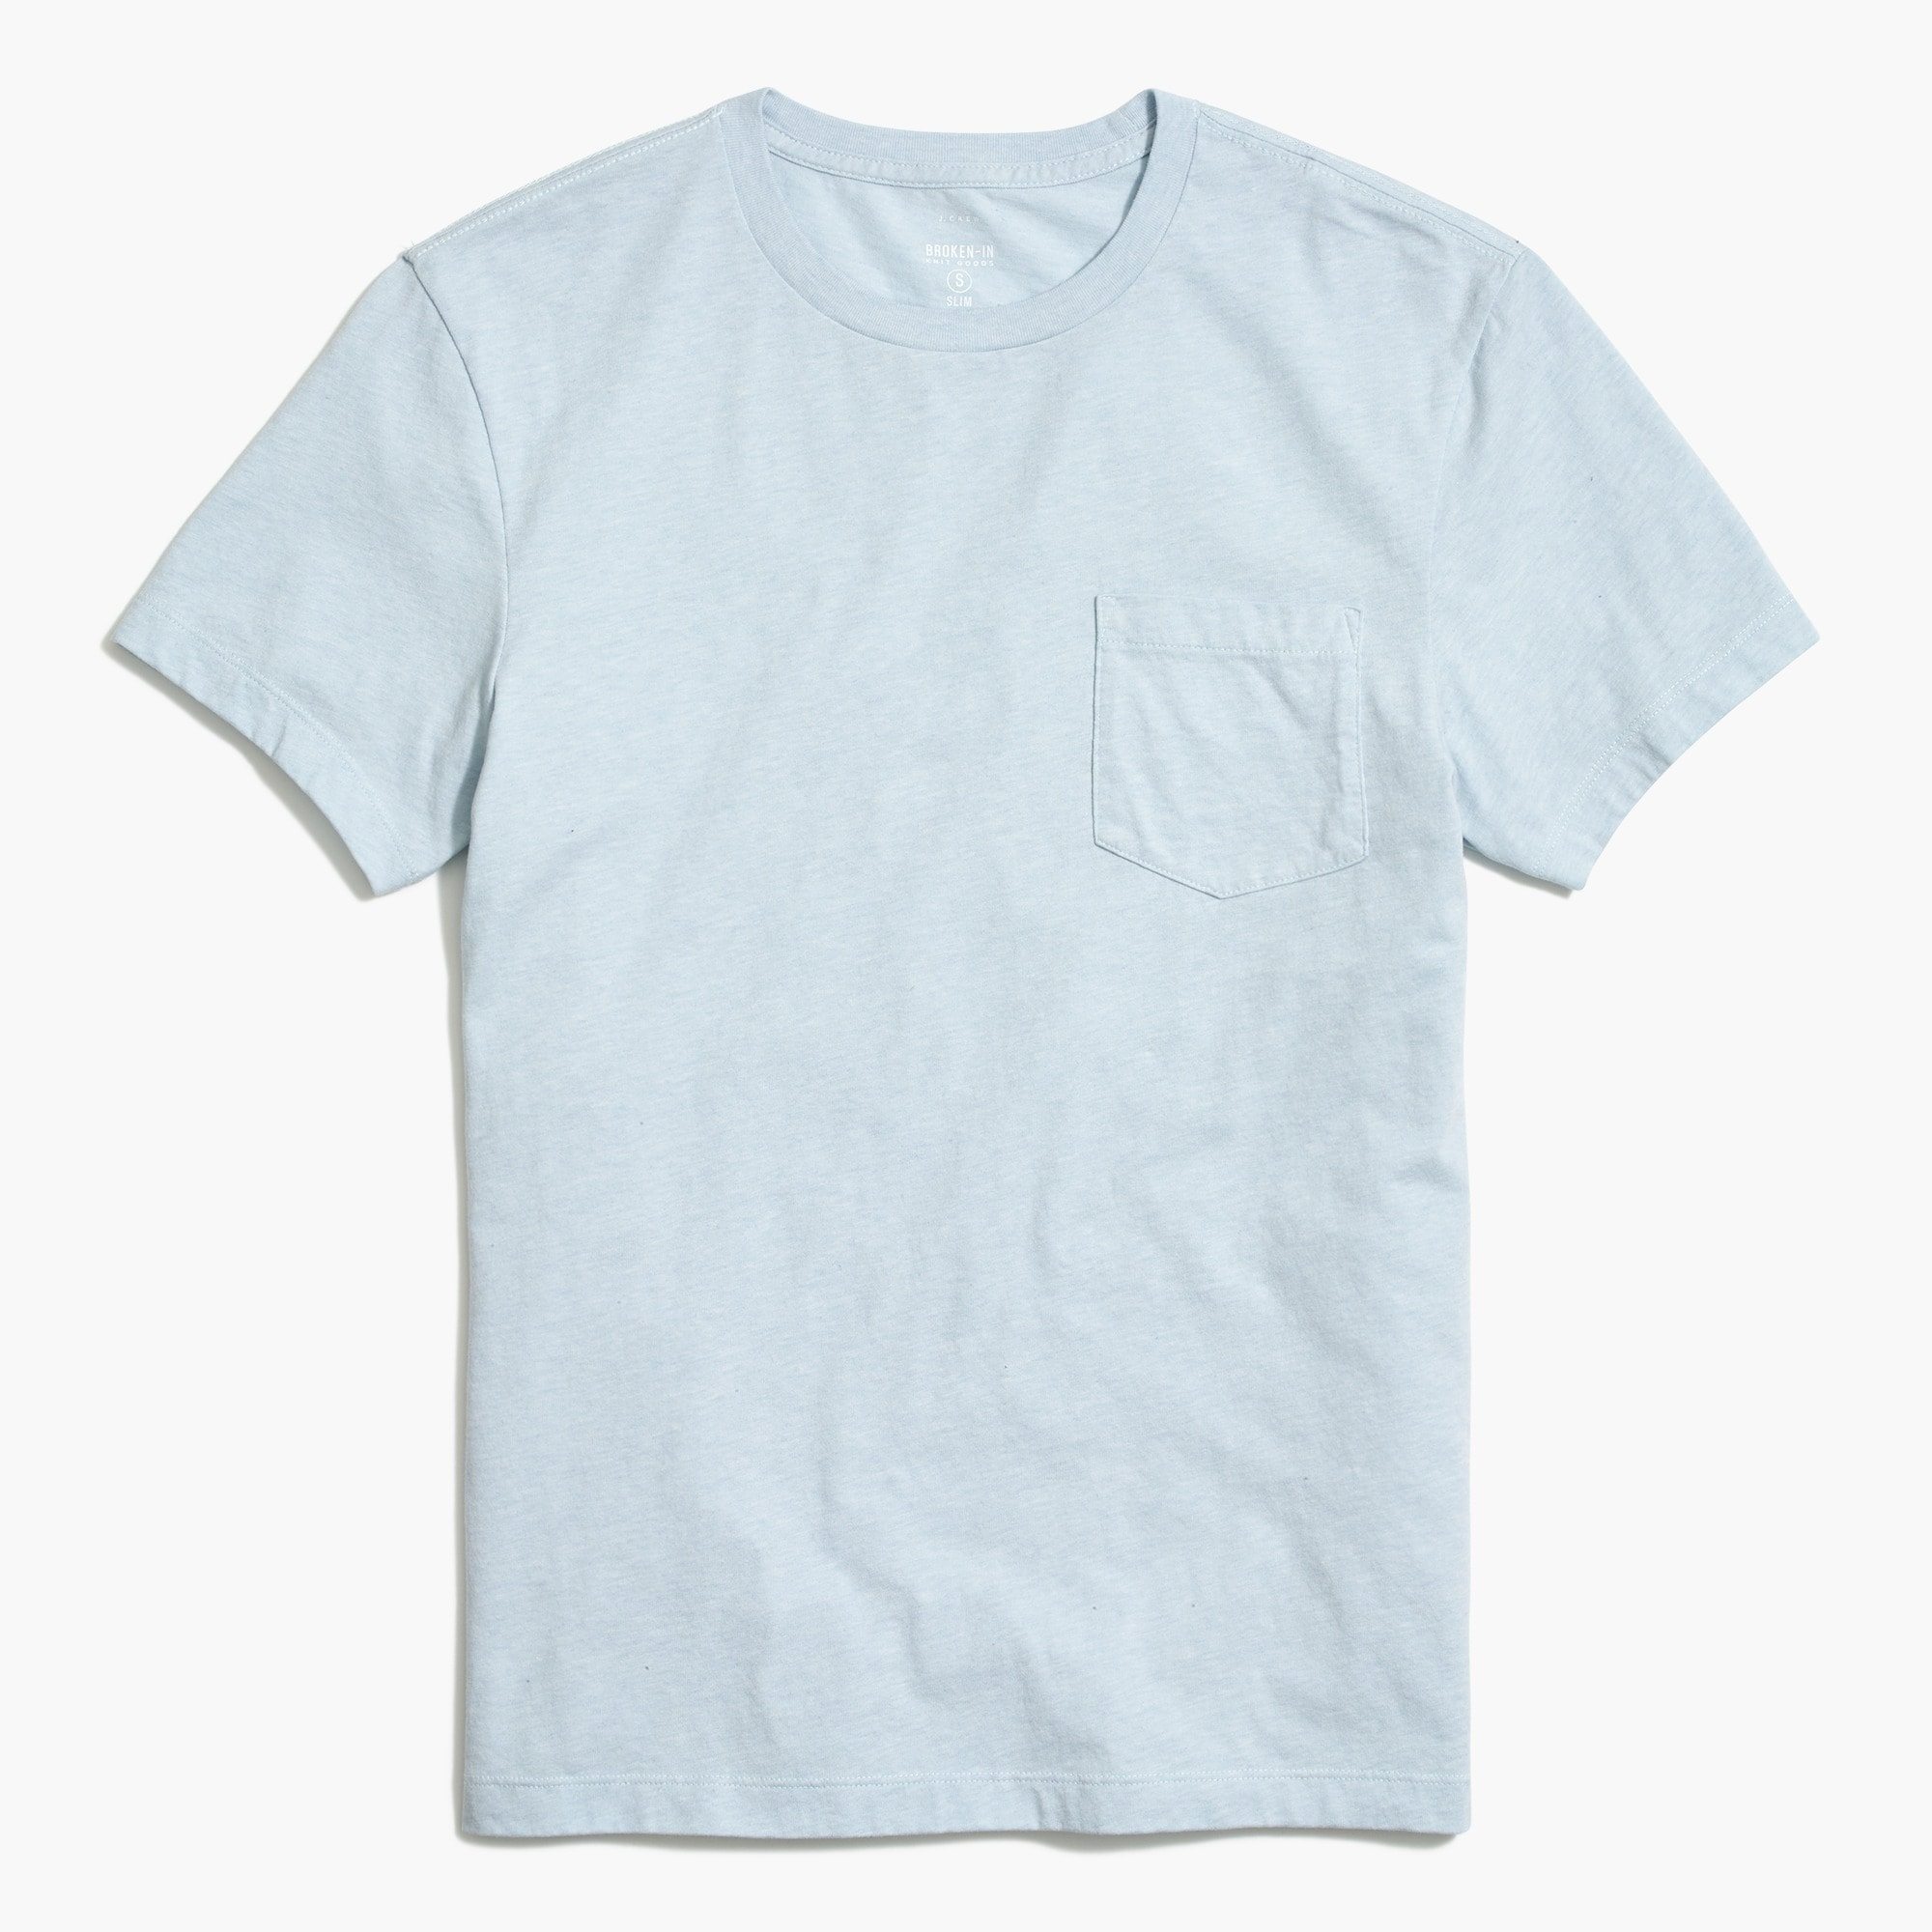 Slim heathered washed jersey pocket T-shirt